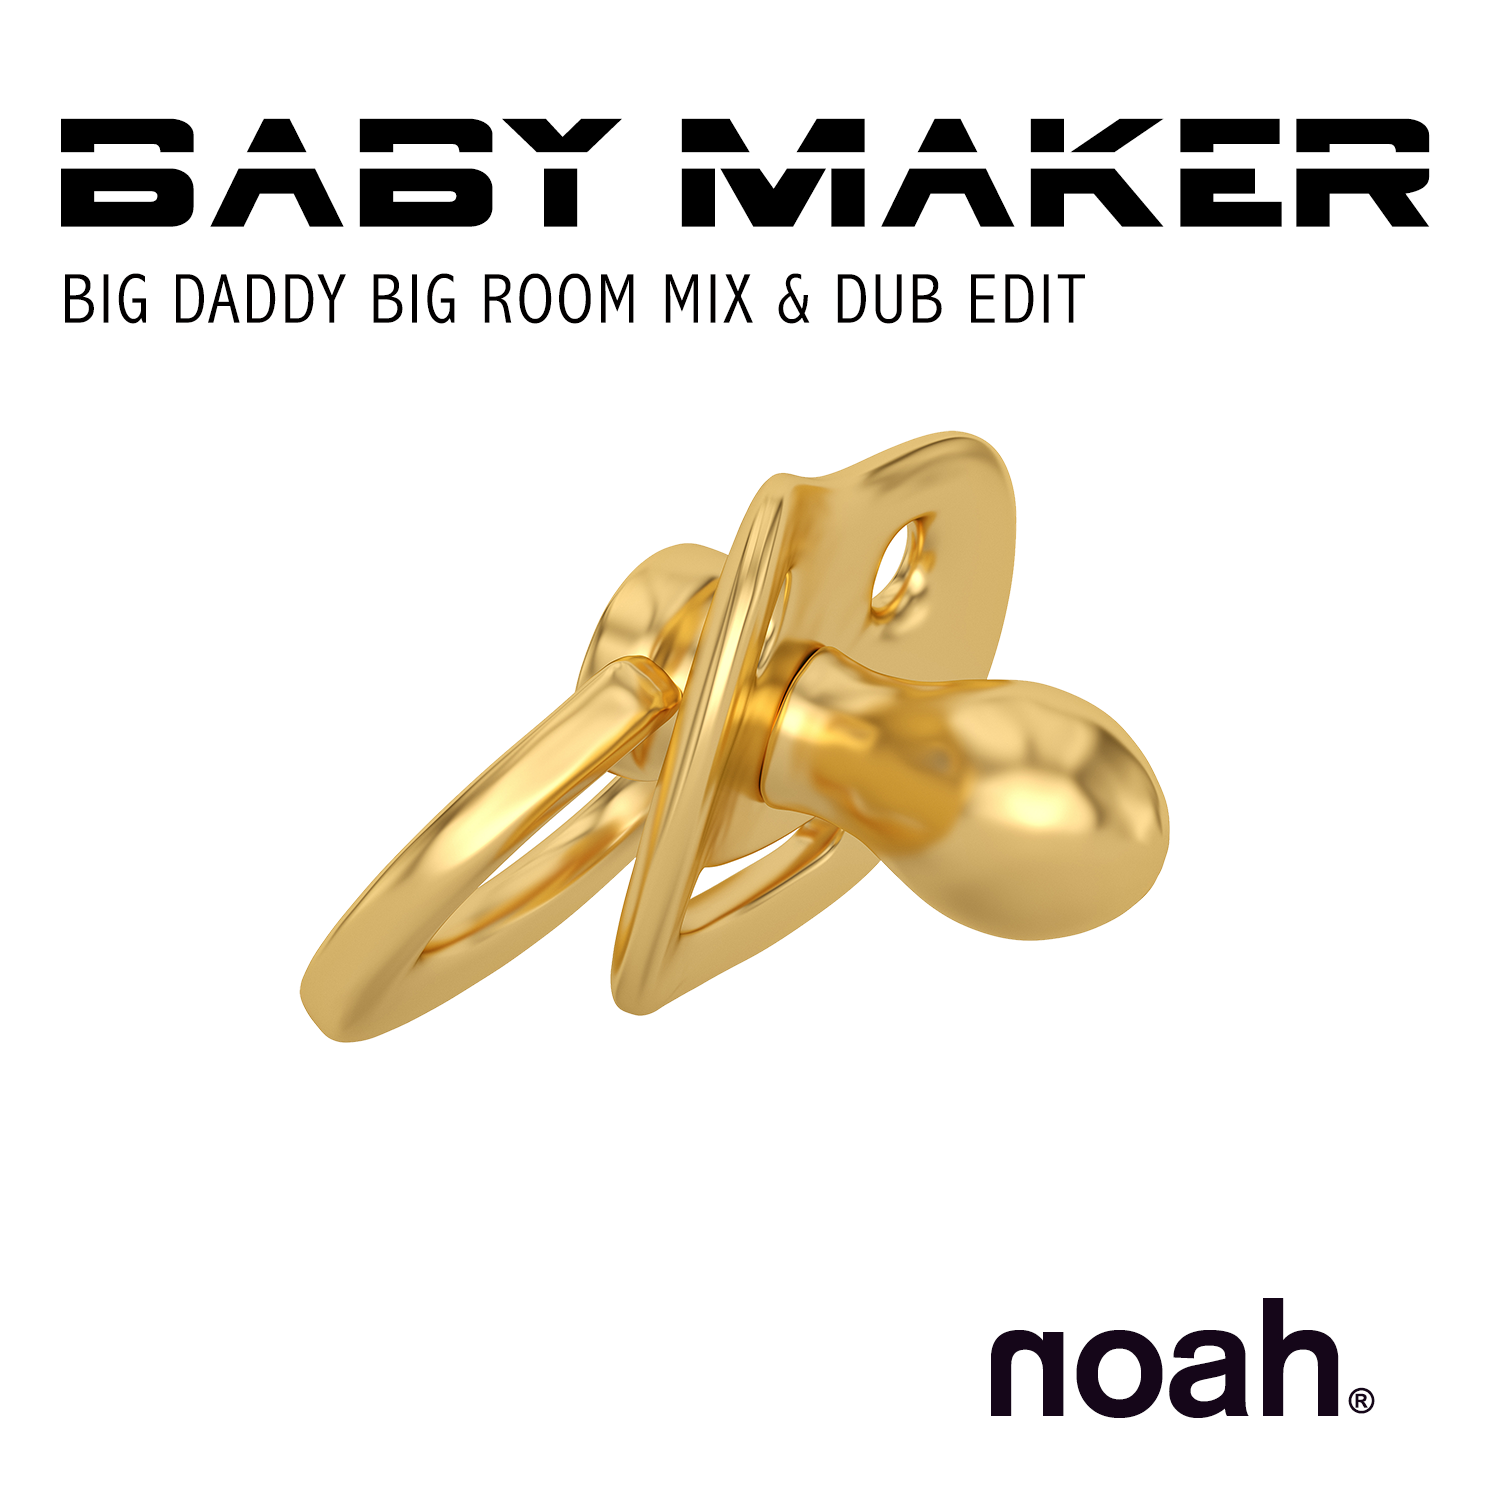 NOAH - BABYMAKER - The Big Daddy Big Room Mix